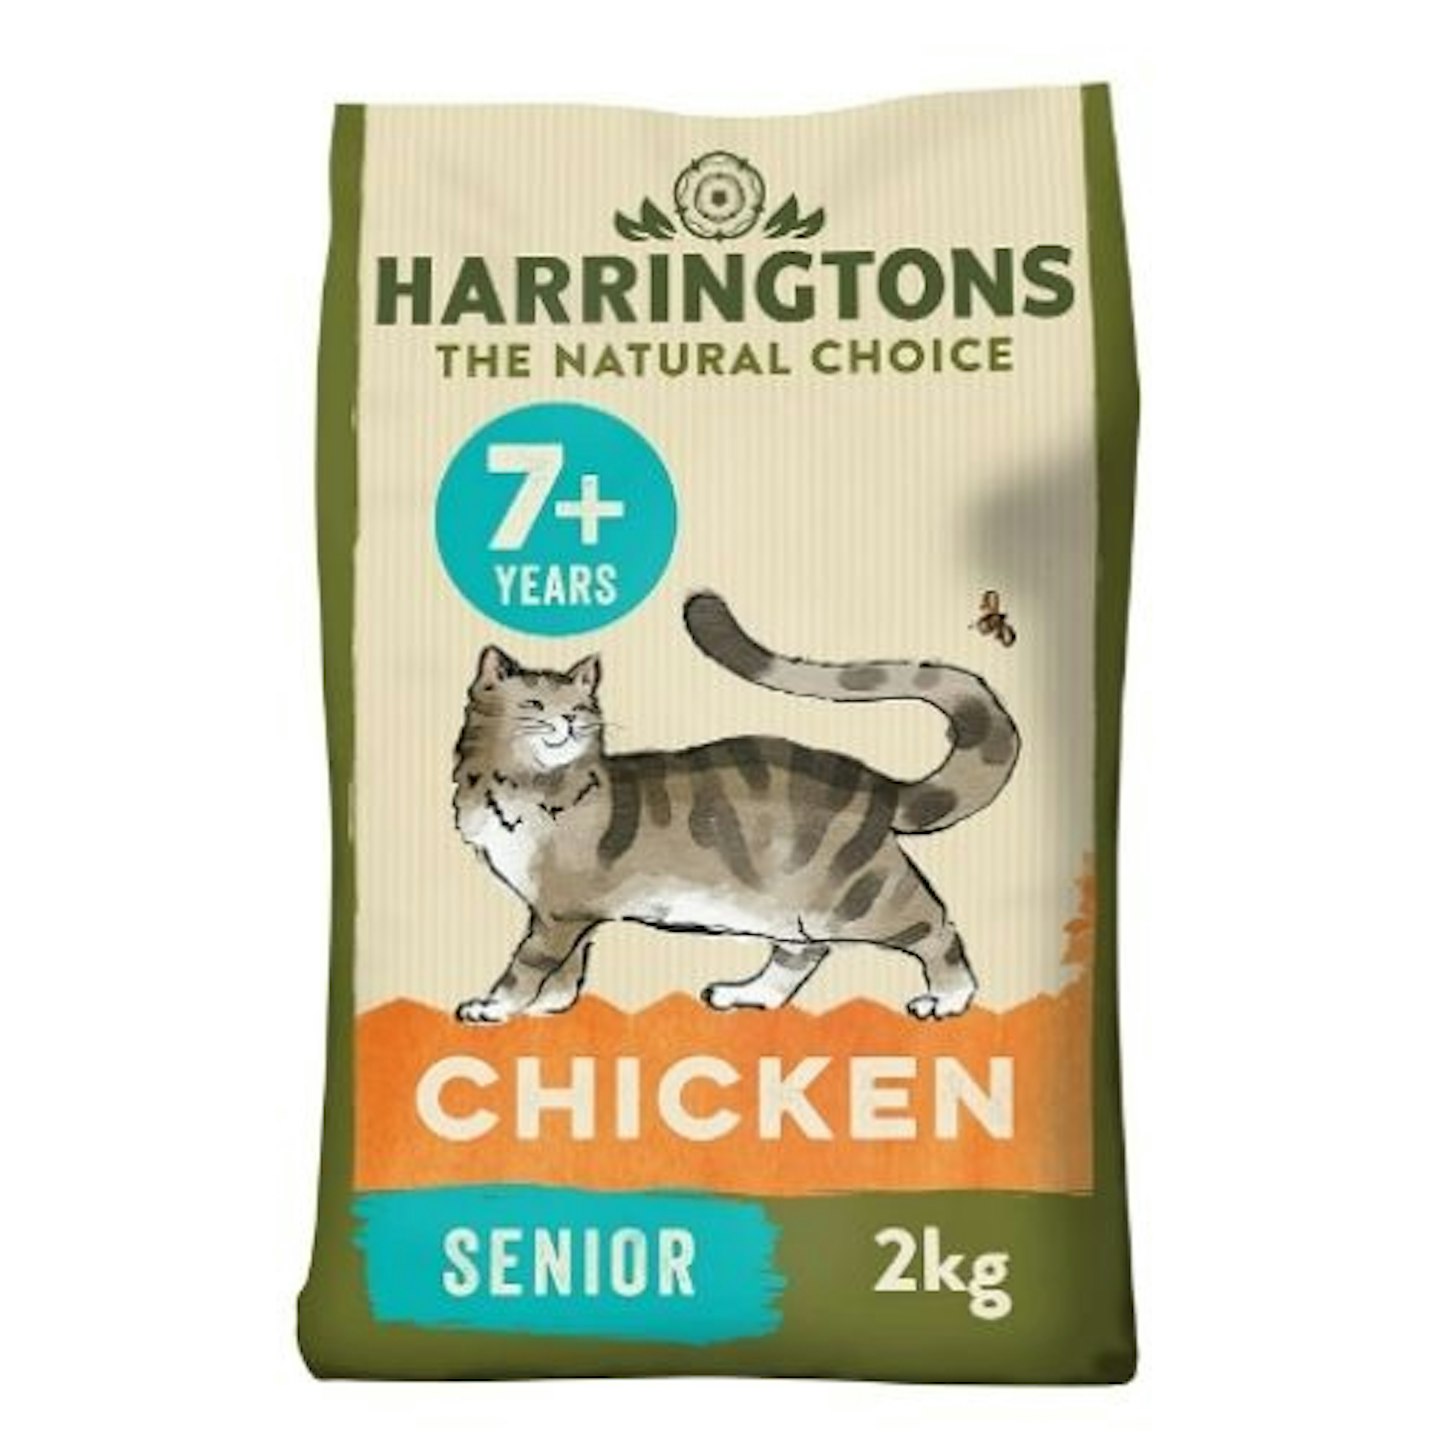 Harringtons complete senior dry cat food bag